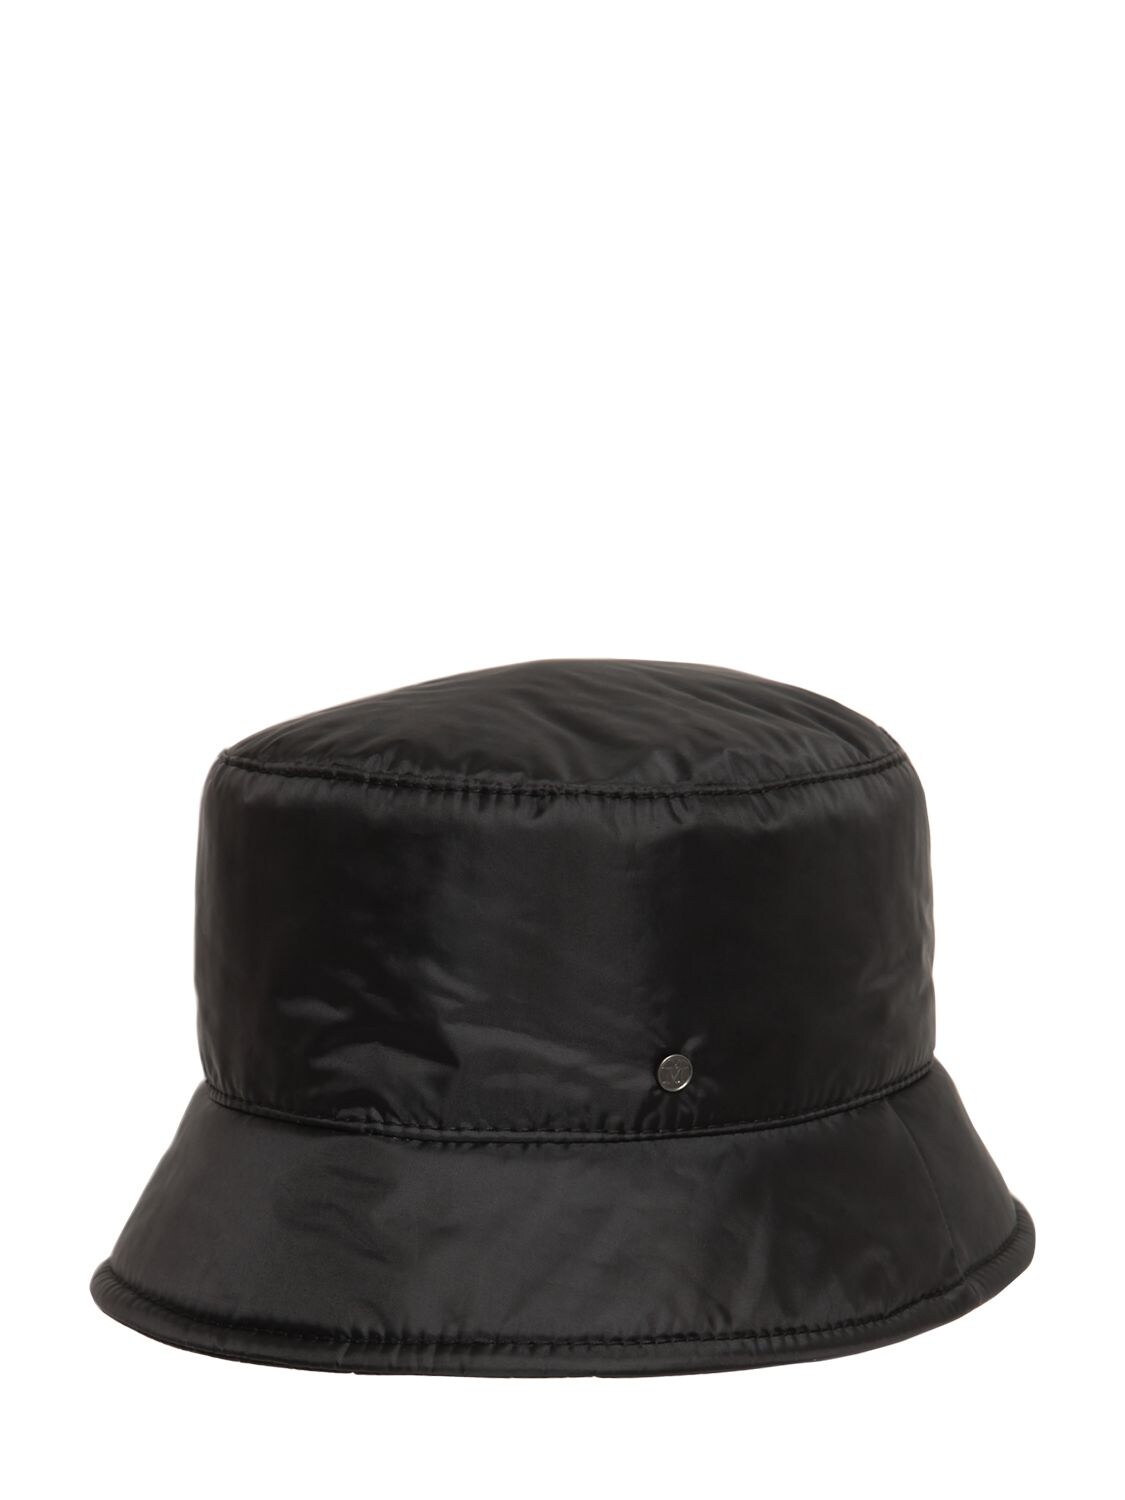 Maison Michel Axel Bomber Nylon Hat In Black